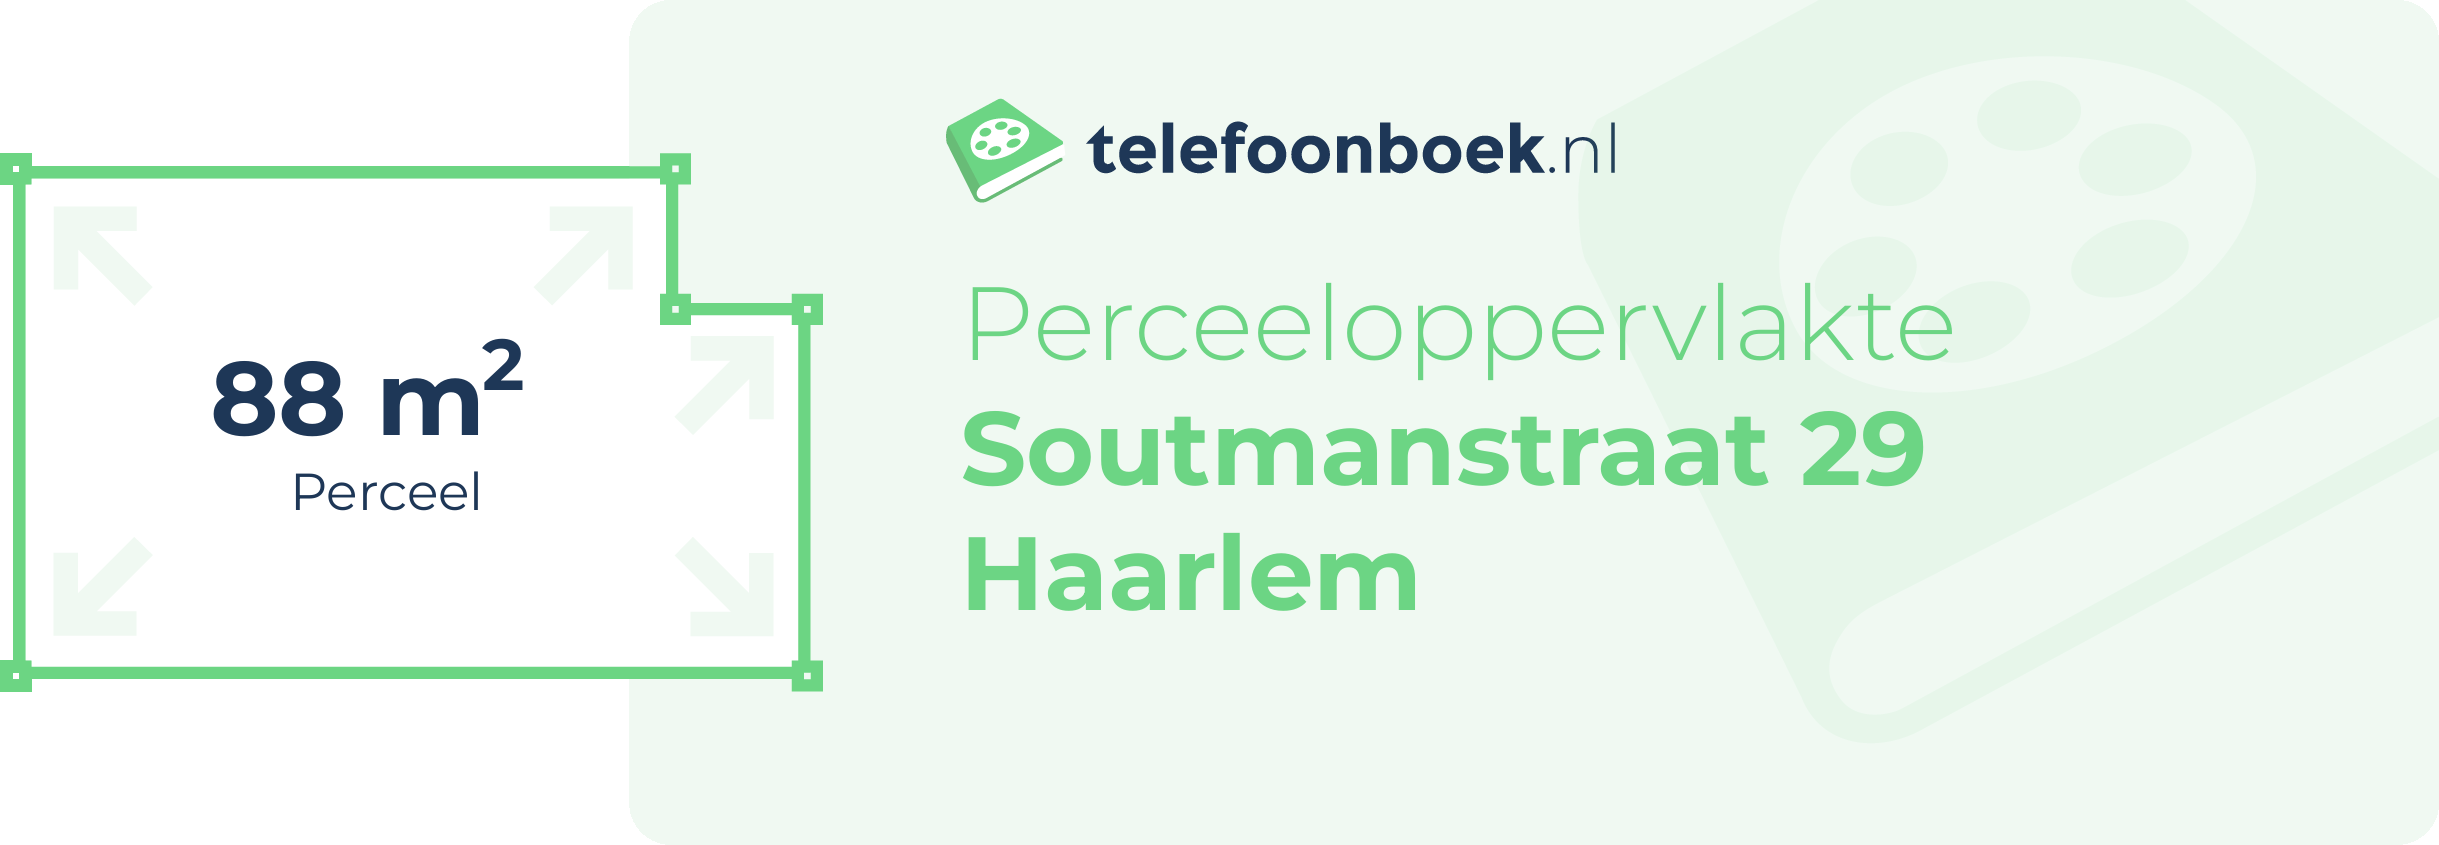 Perceeloppervlakte Soutmanstraat 29 Haarlem